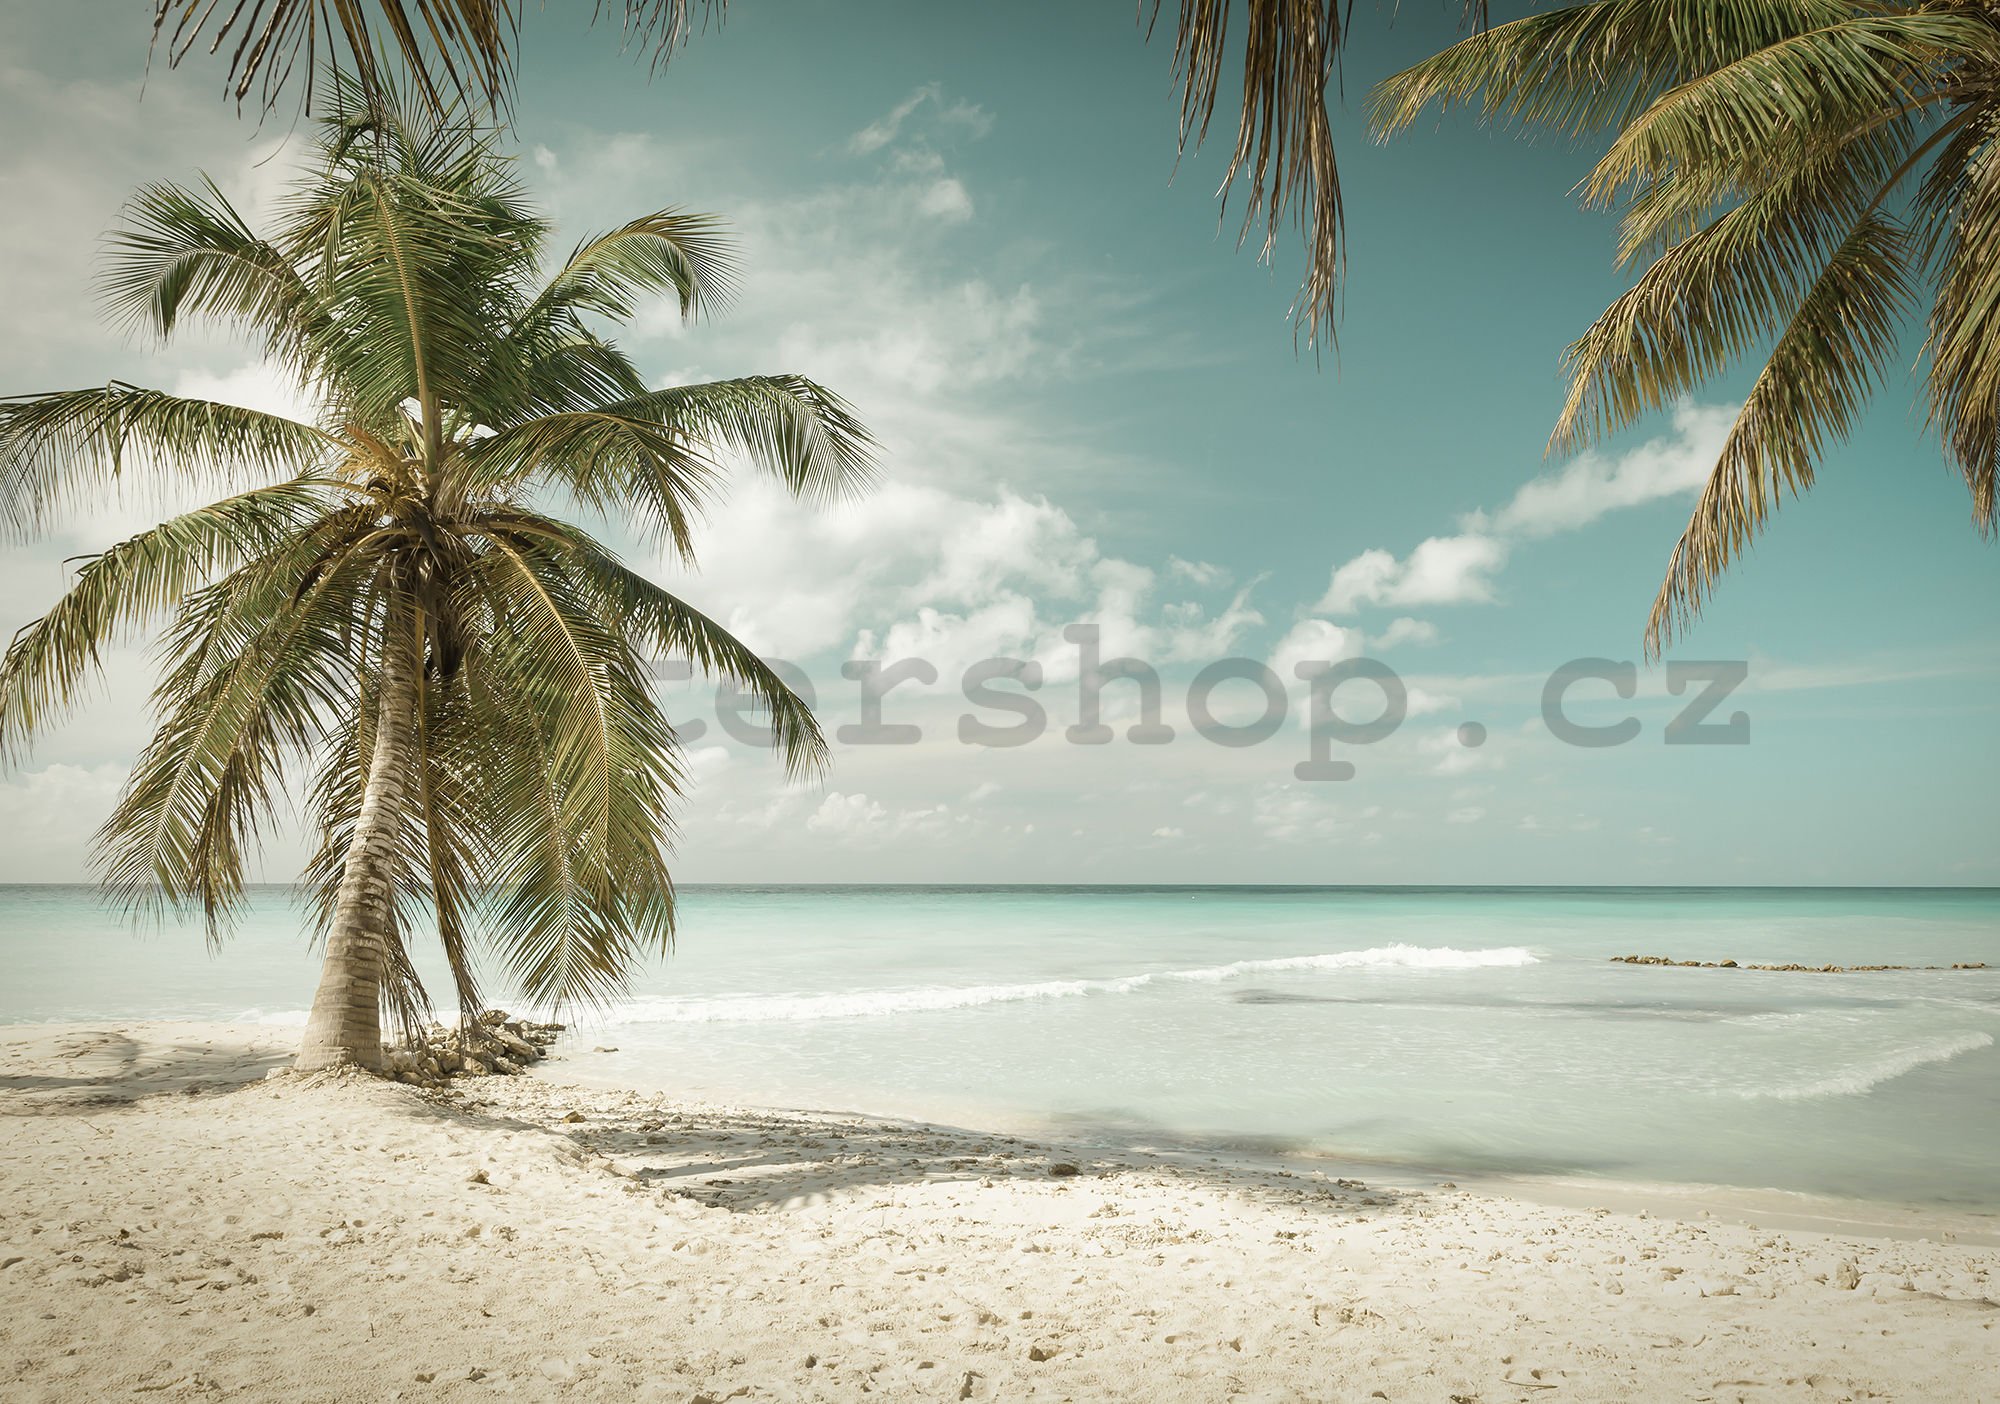 Fototapeta: Palmy nad mořem - 184x254 cm